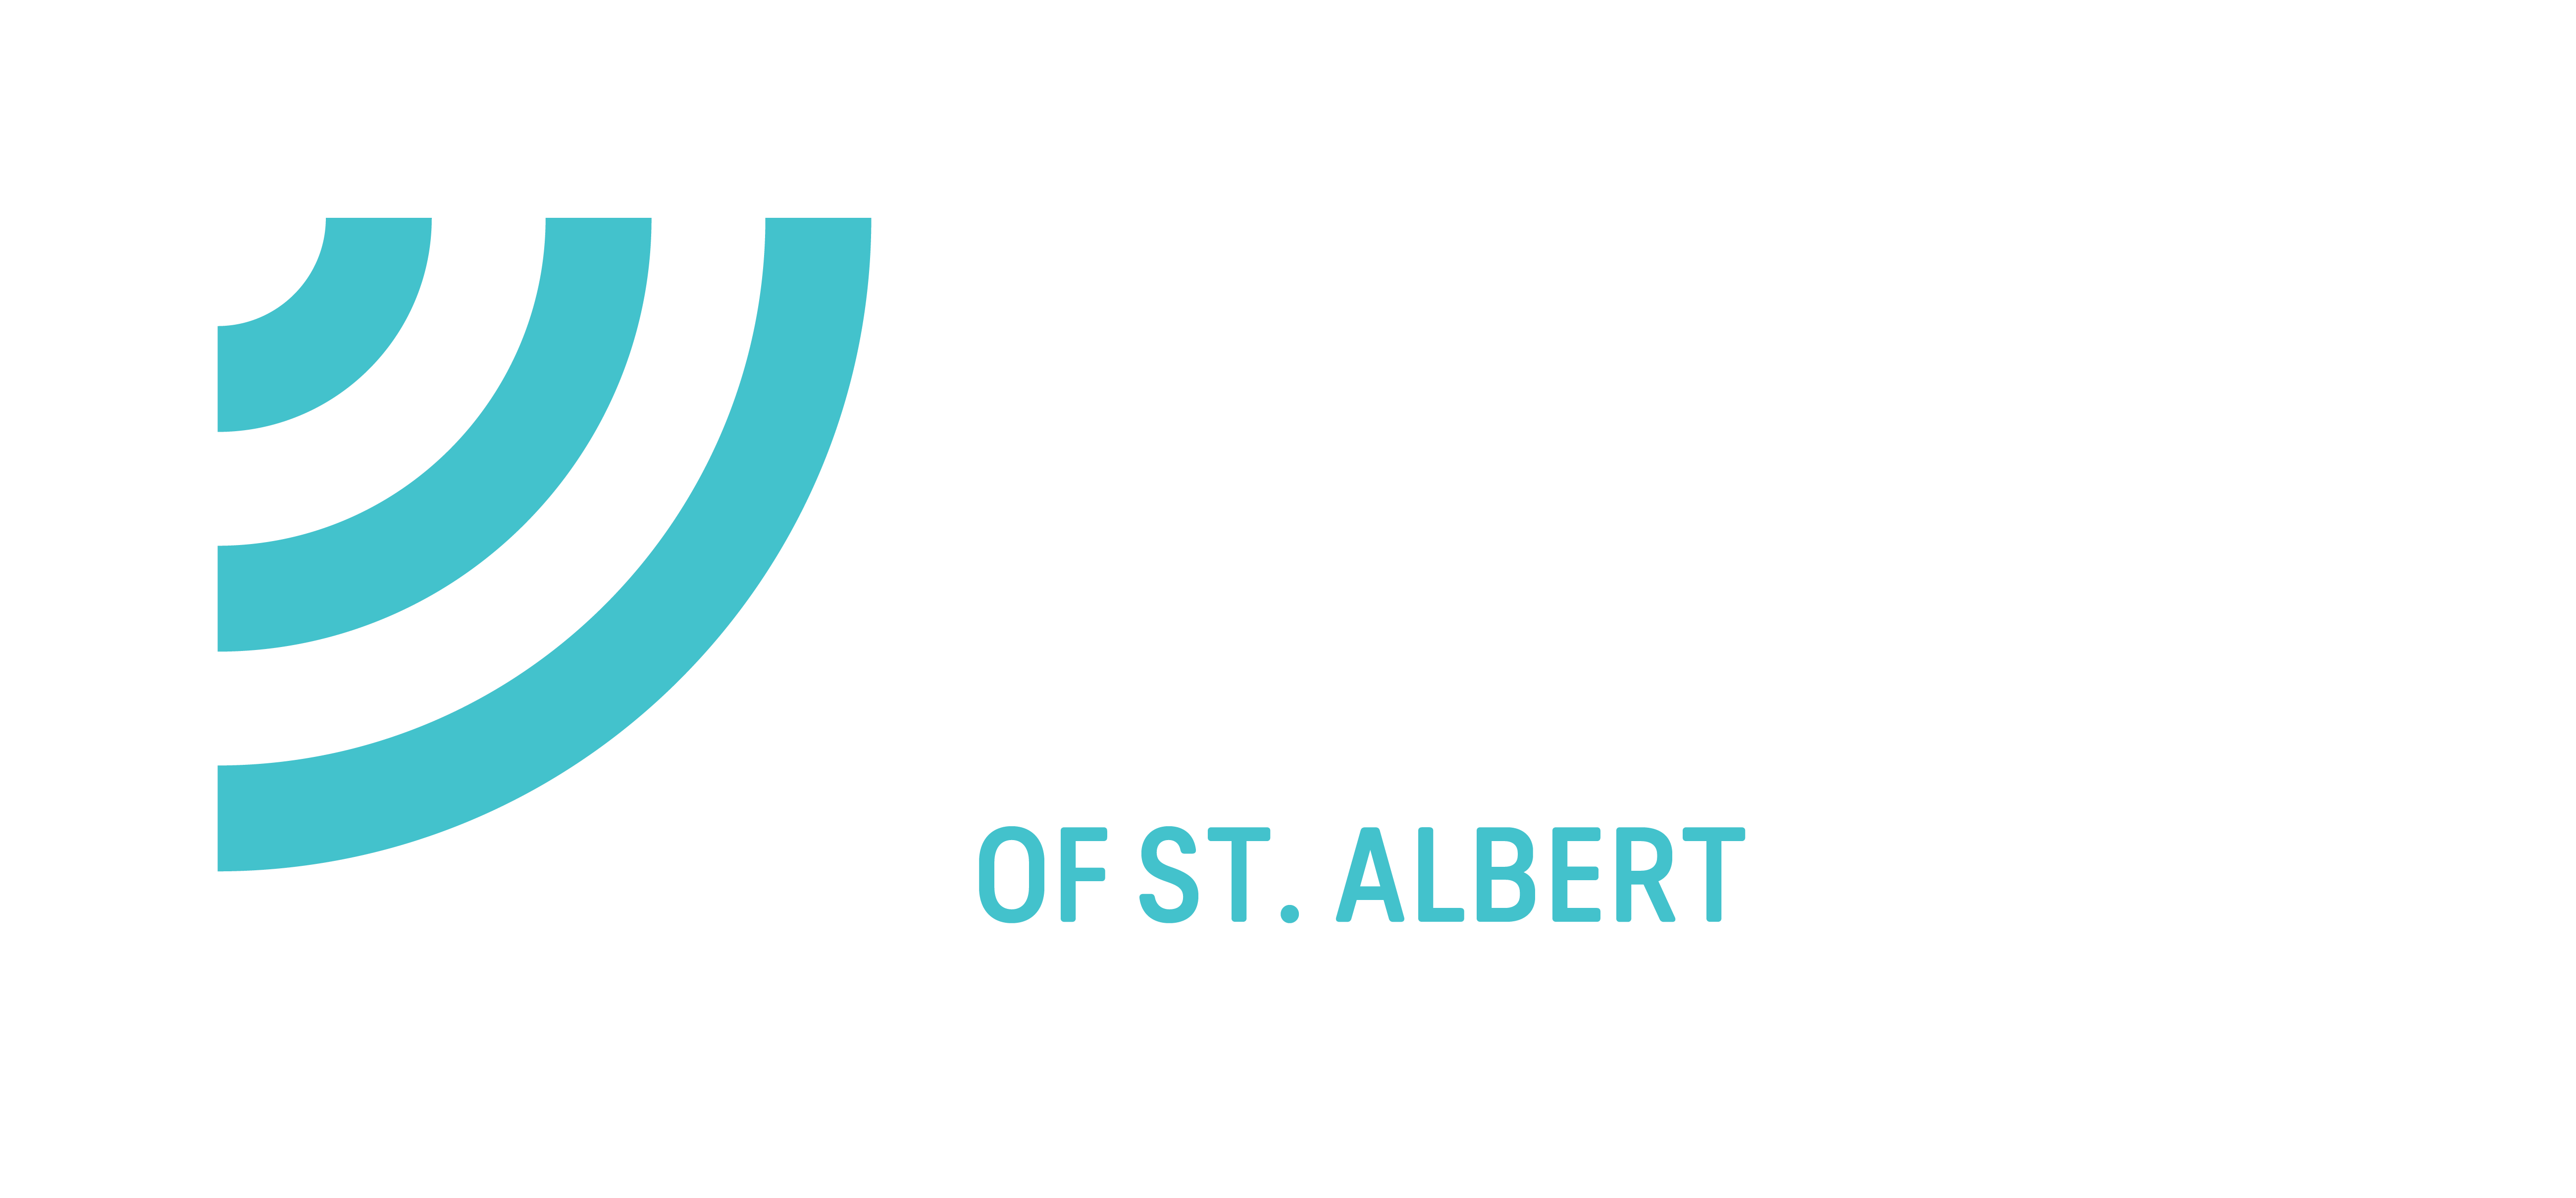 Big Brothers Big Sisters of St. Albert